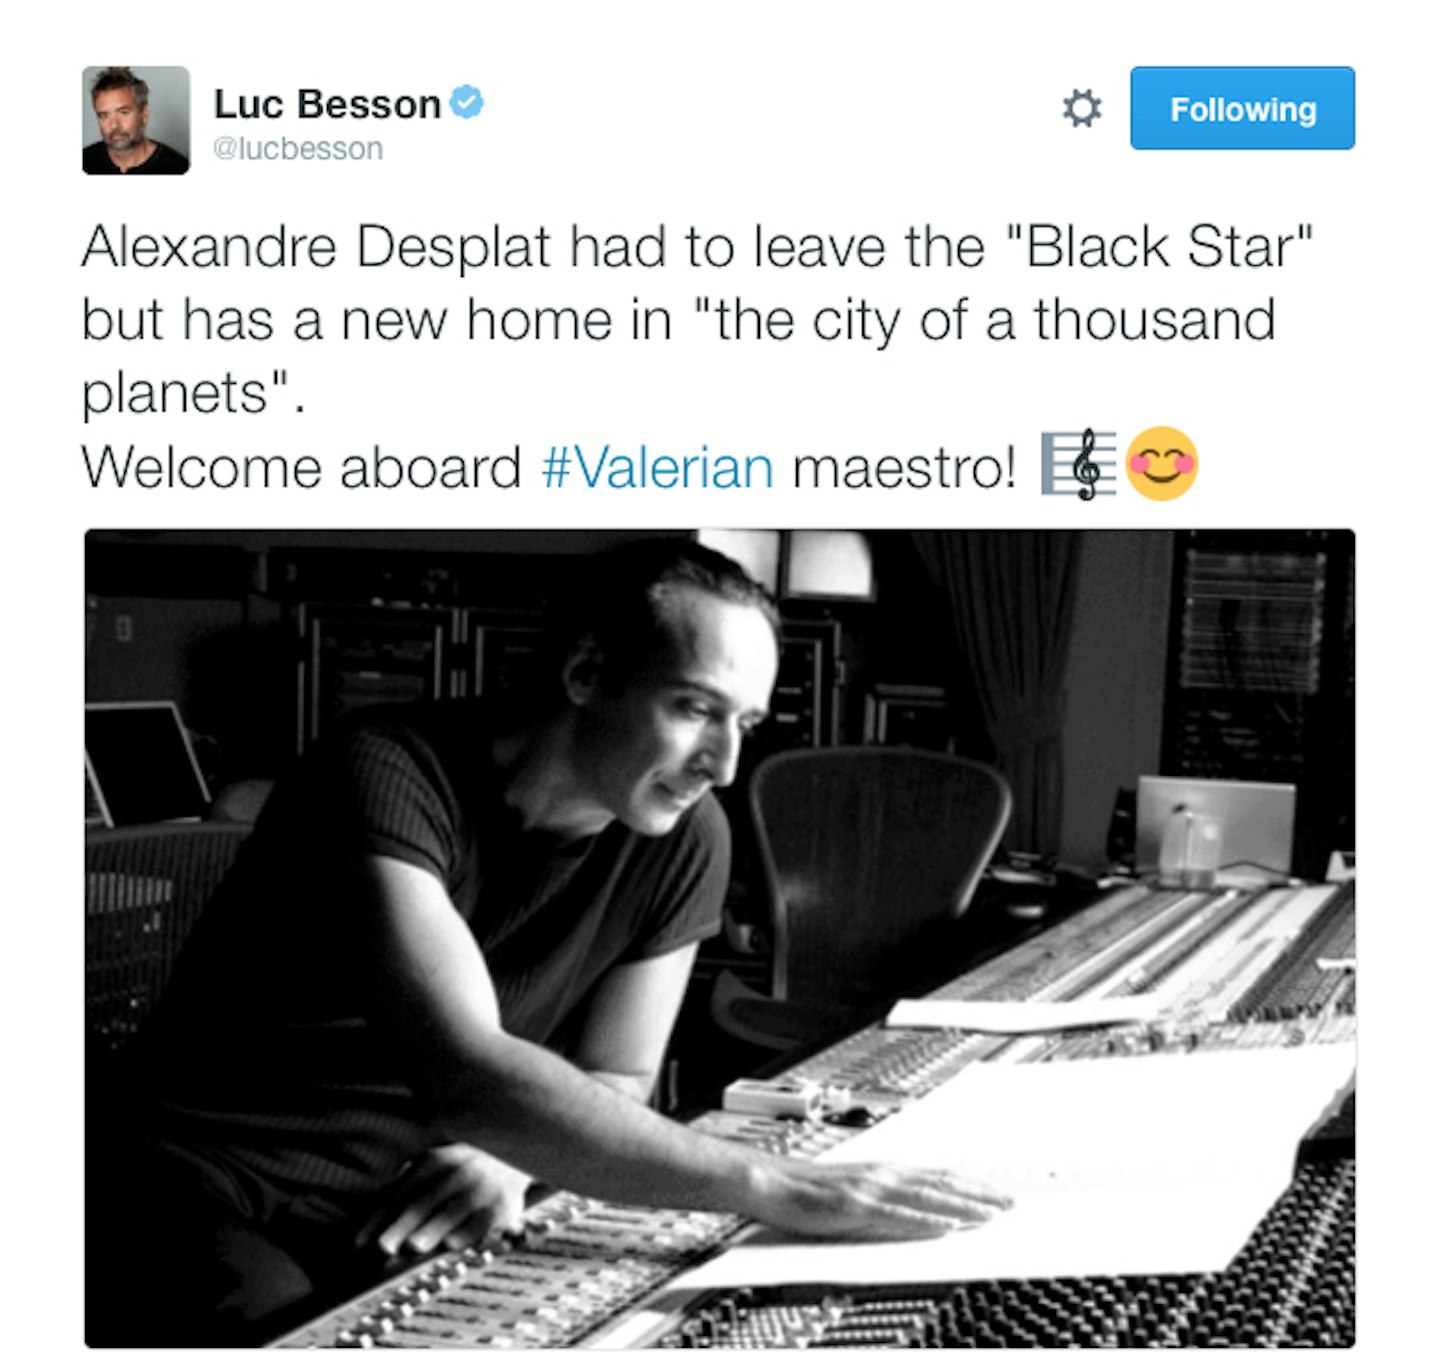 Luc Besson Valerian Alexandre Desplat tweet